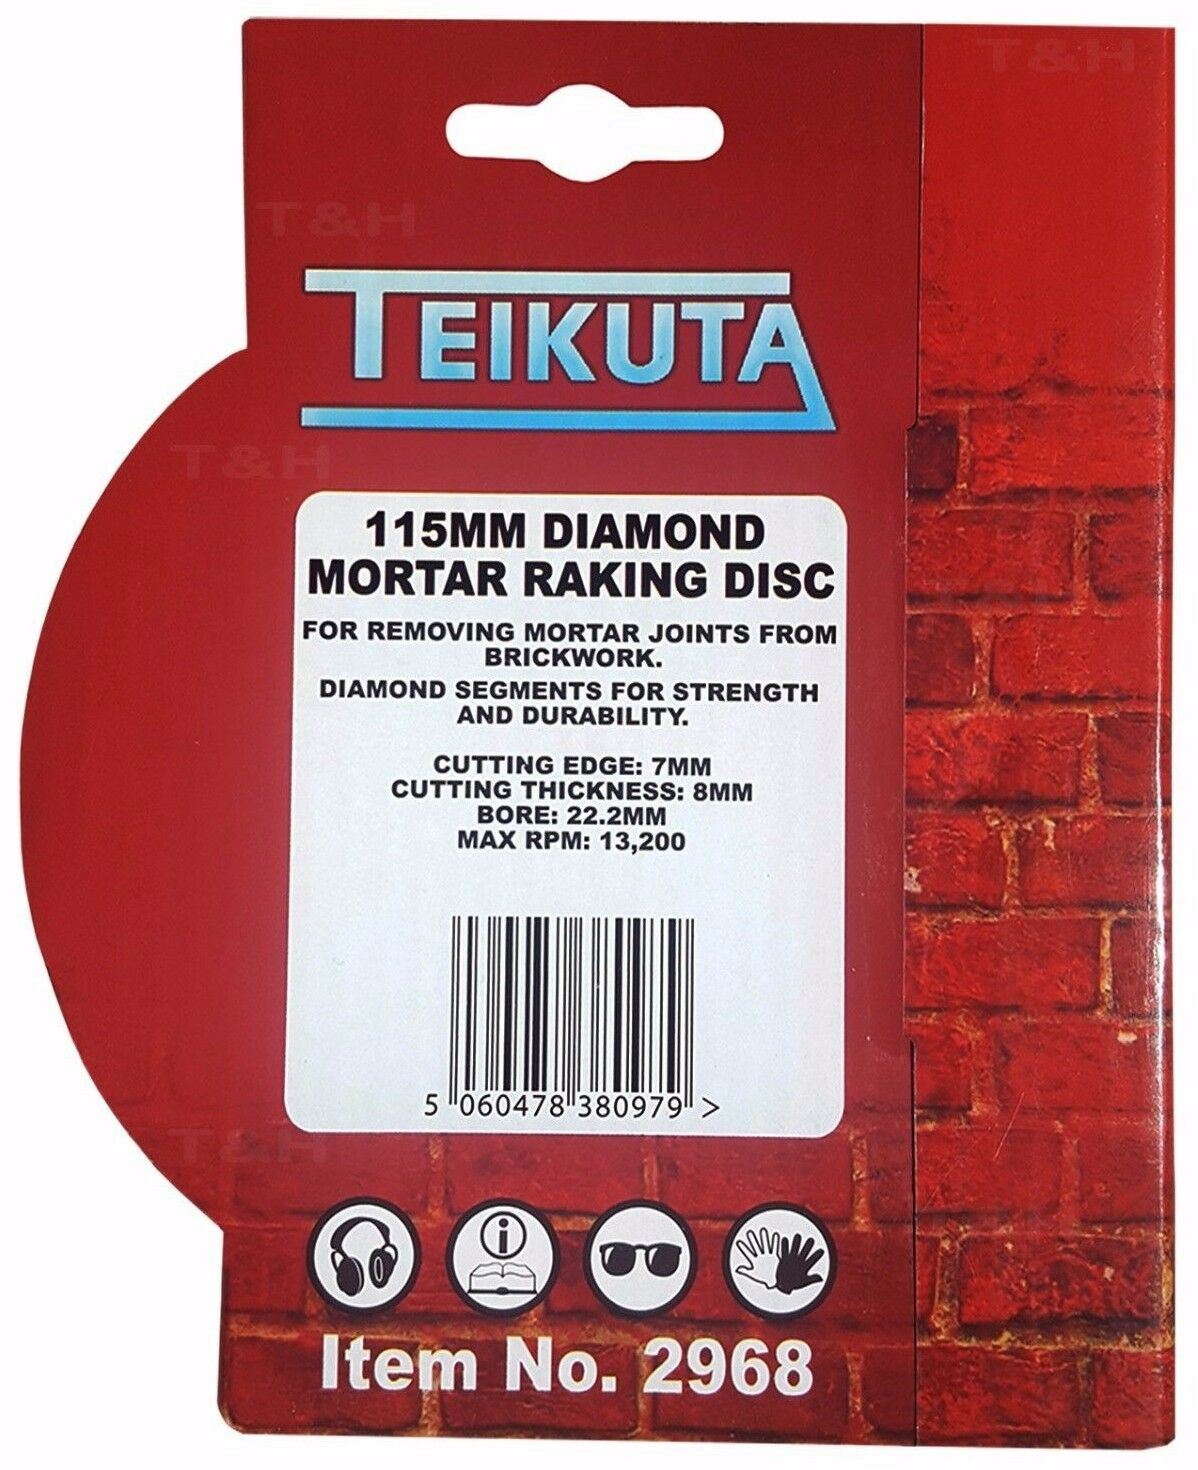 TEIKUTA 4.5" ( 115MM ) DIAMOND MORTAR RAKING DISC ( X 1 )